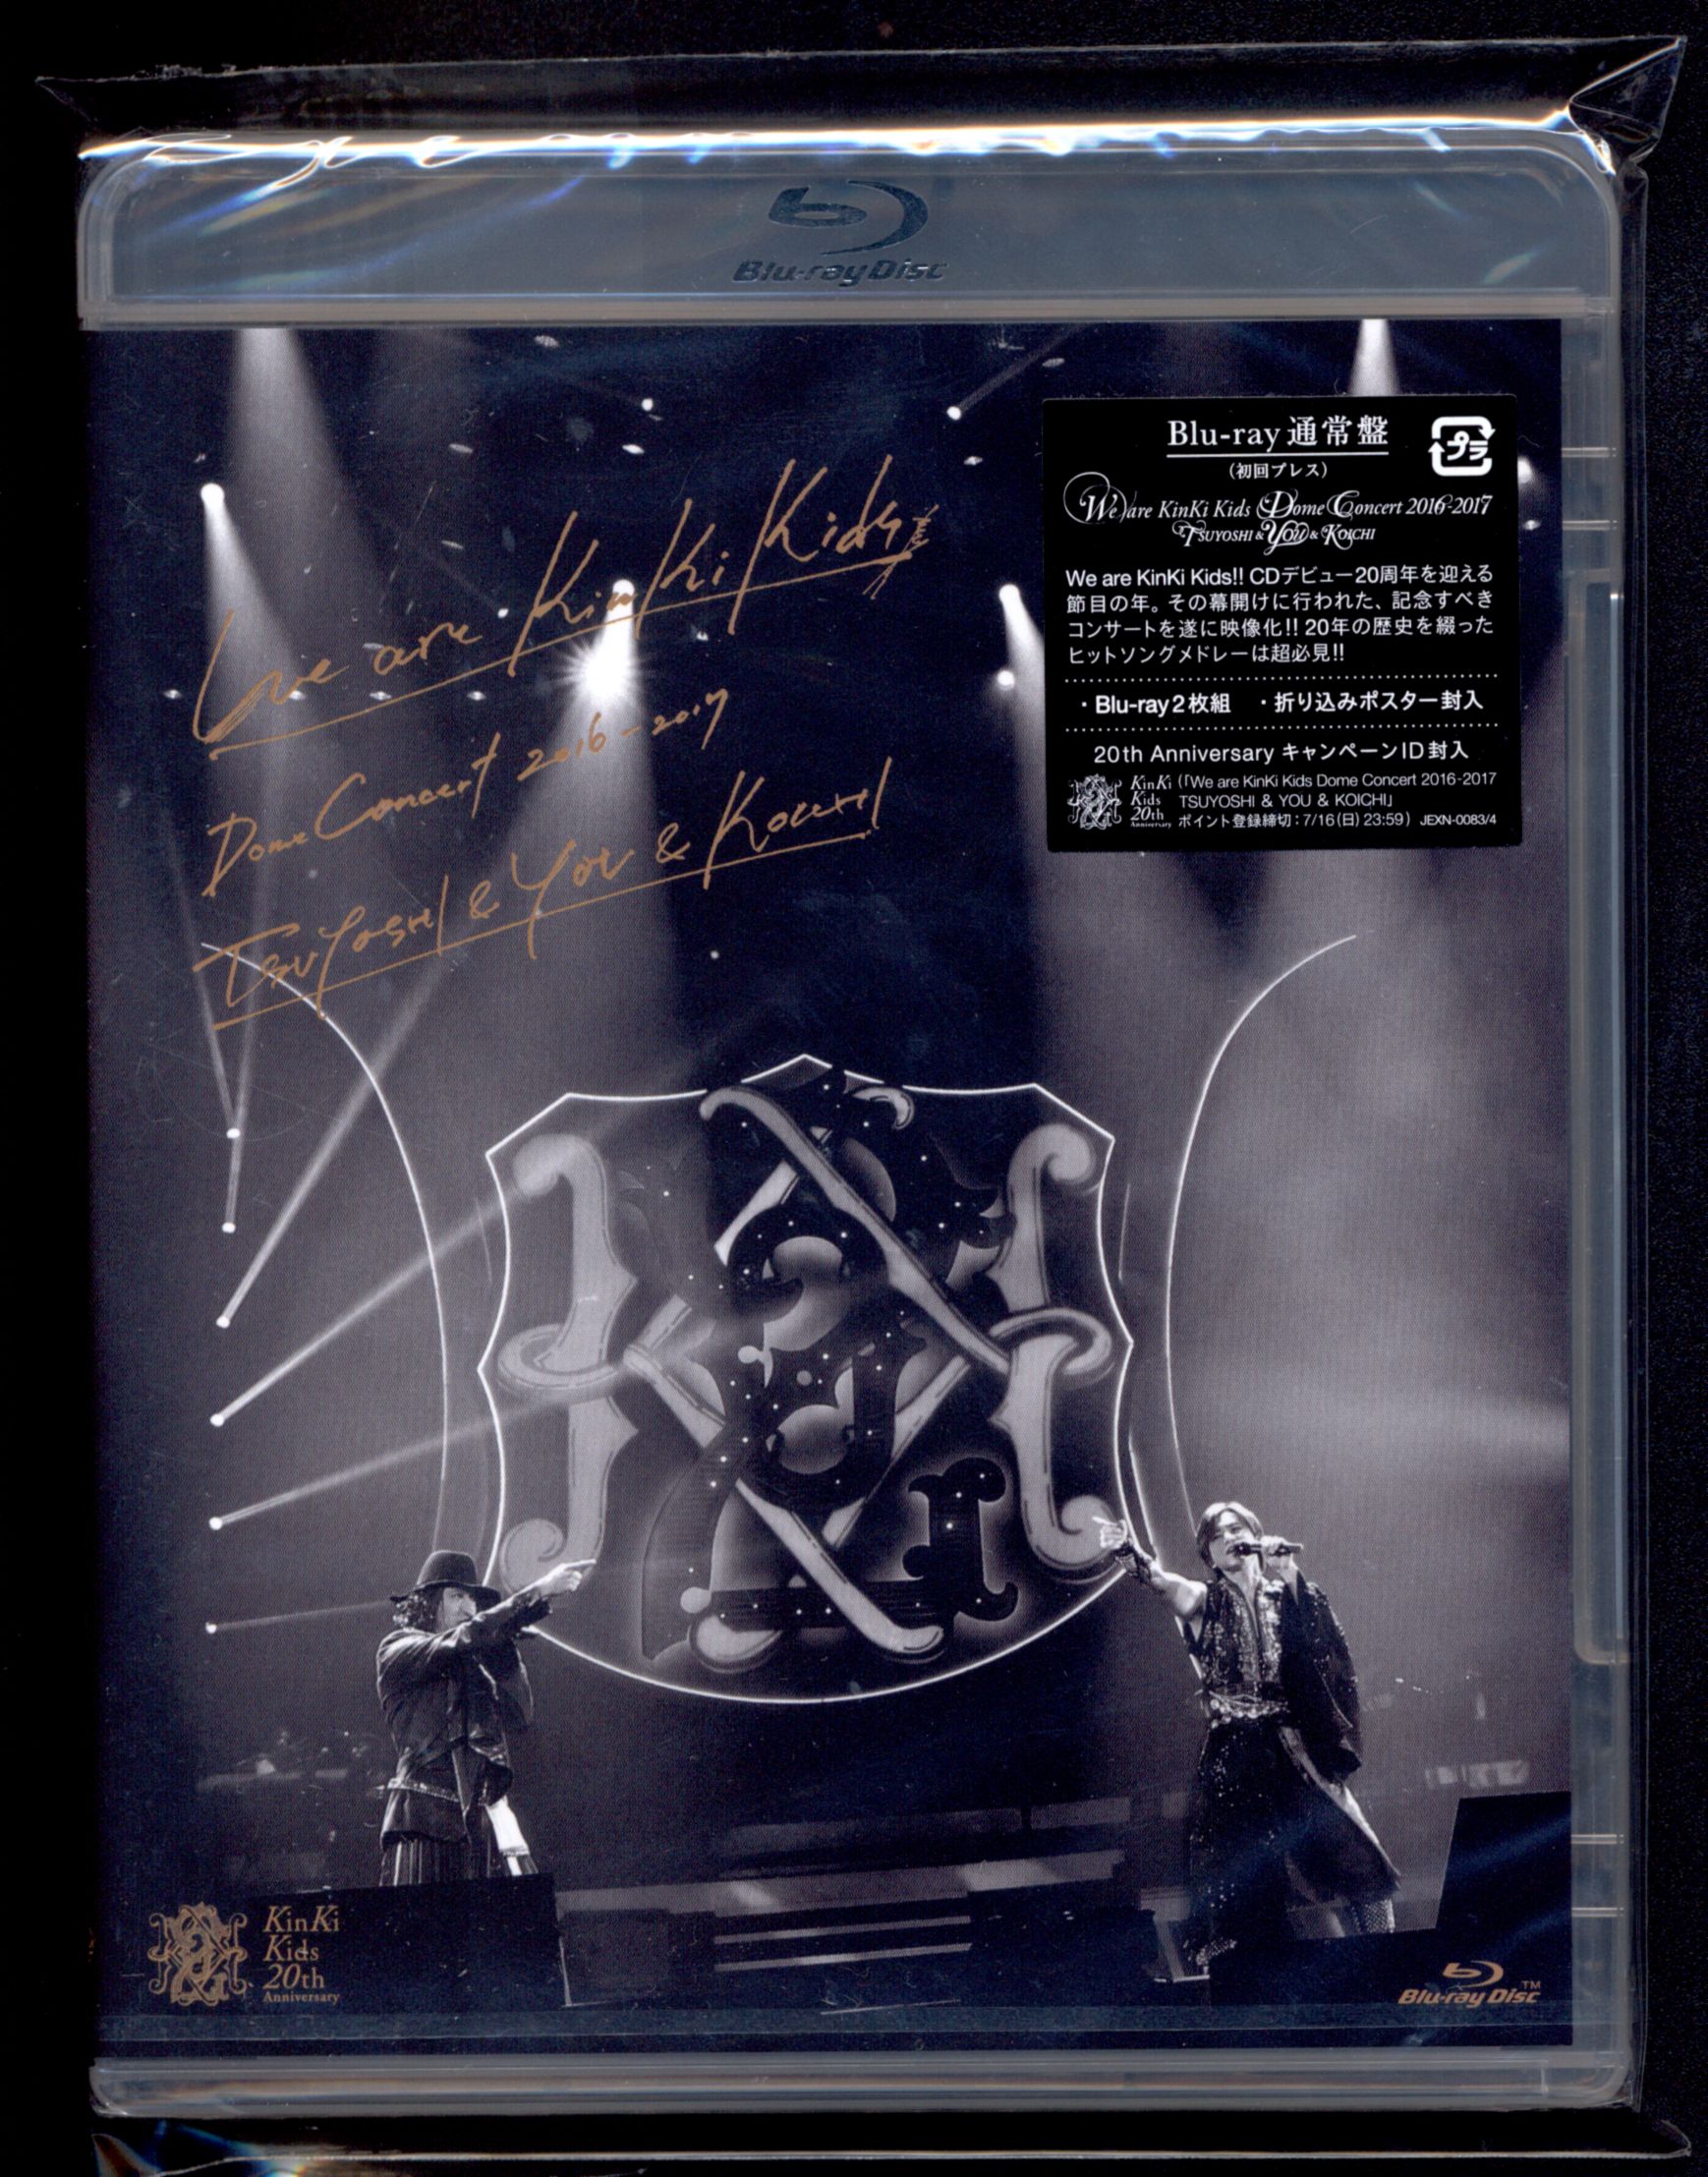 KinKi Kids Blu-ray Regular Edition We are KinKi Kids Dome Concert